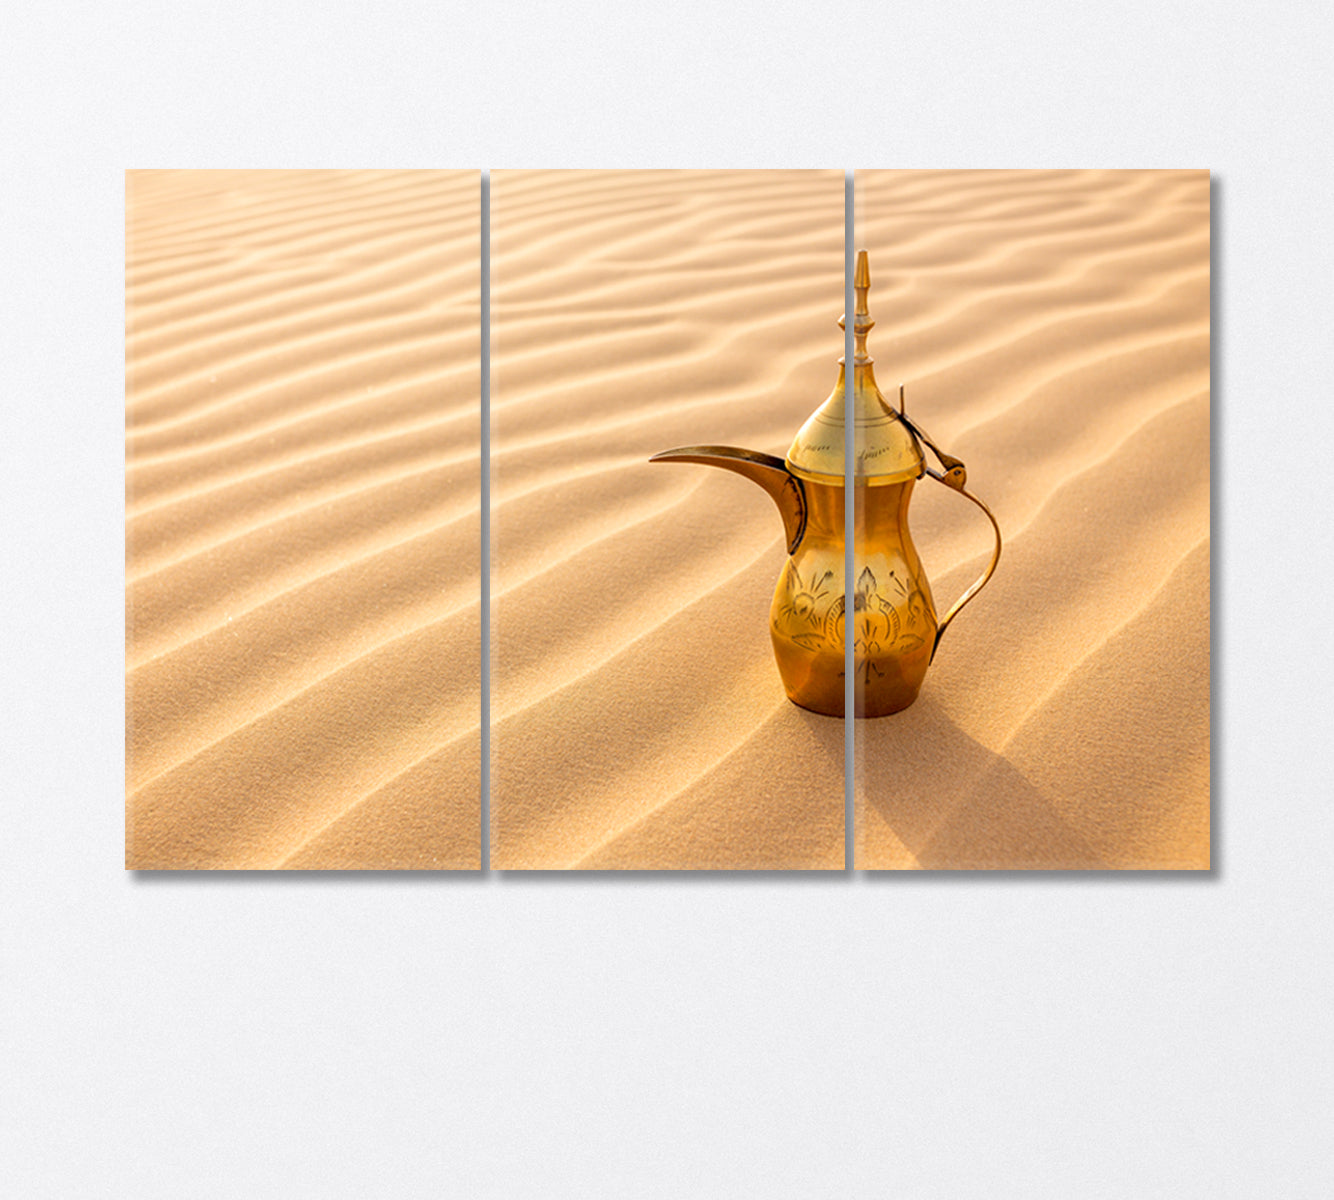 Vintage Arabic Teapot in the Desert Canvas Print-Canvas Print-CetArt-3 Panels-36x24 inches-CetArt